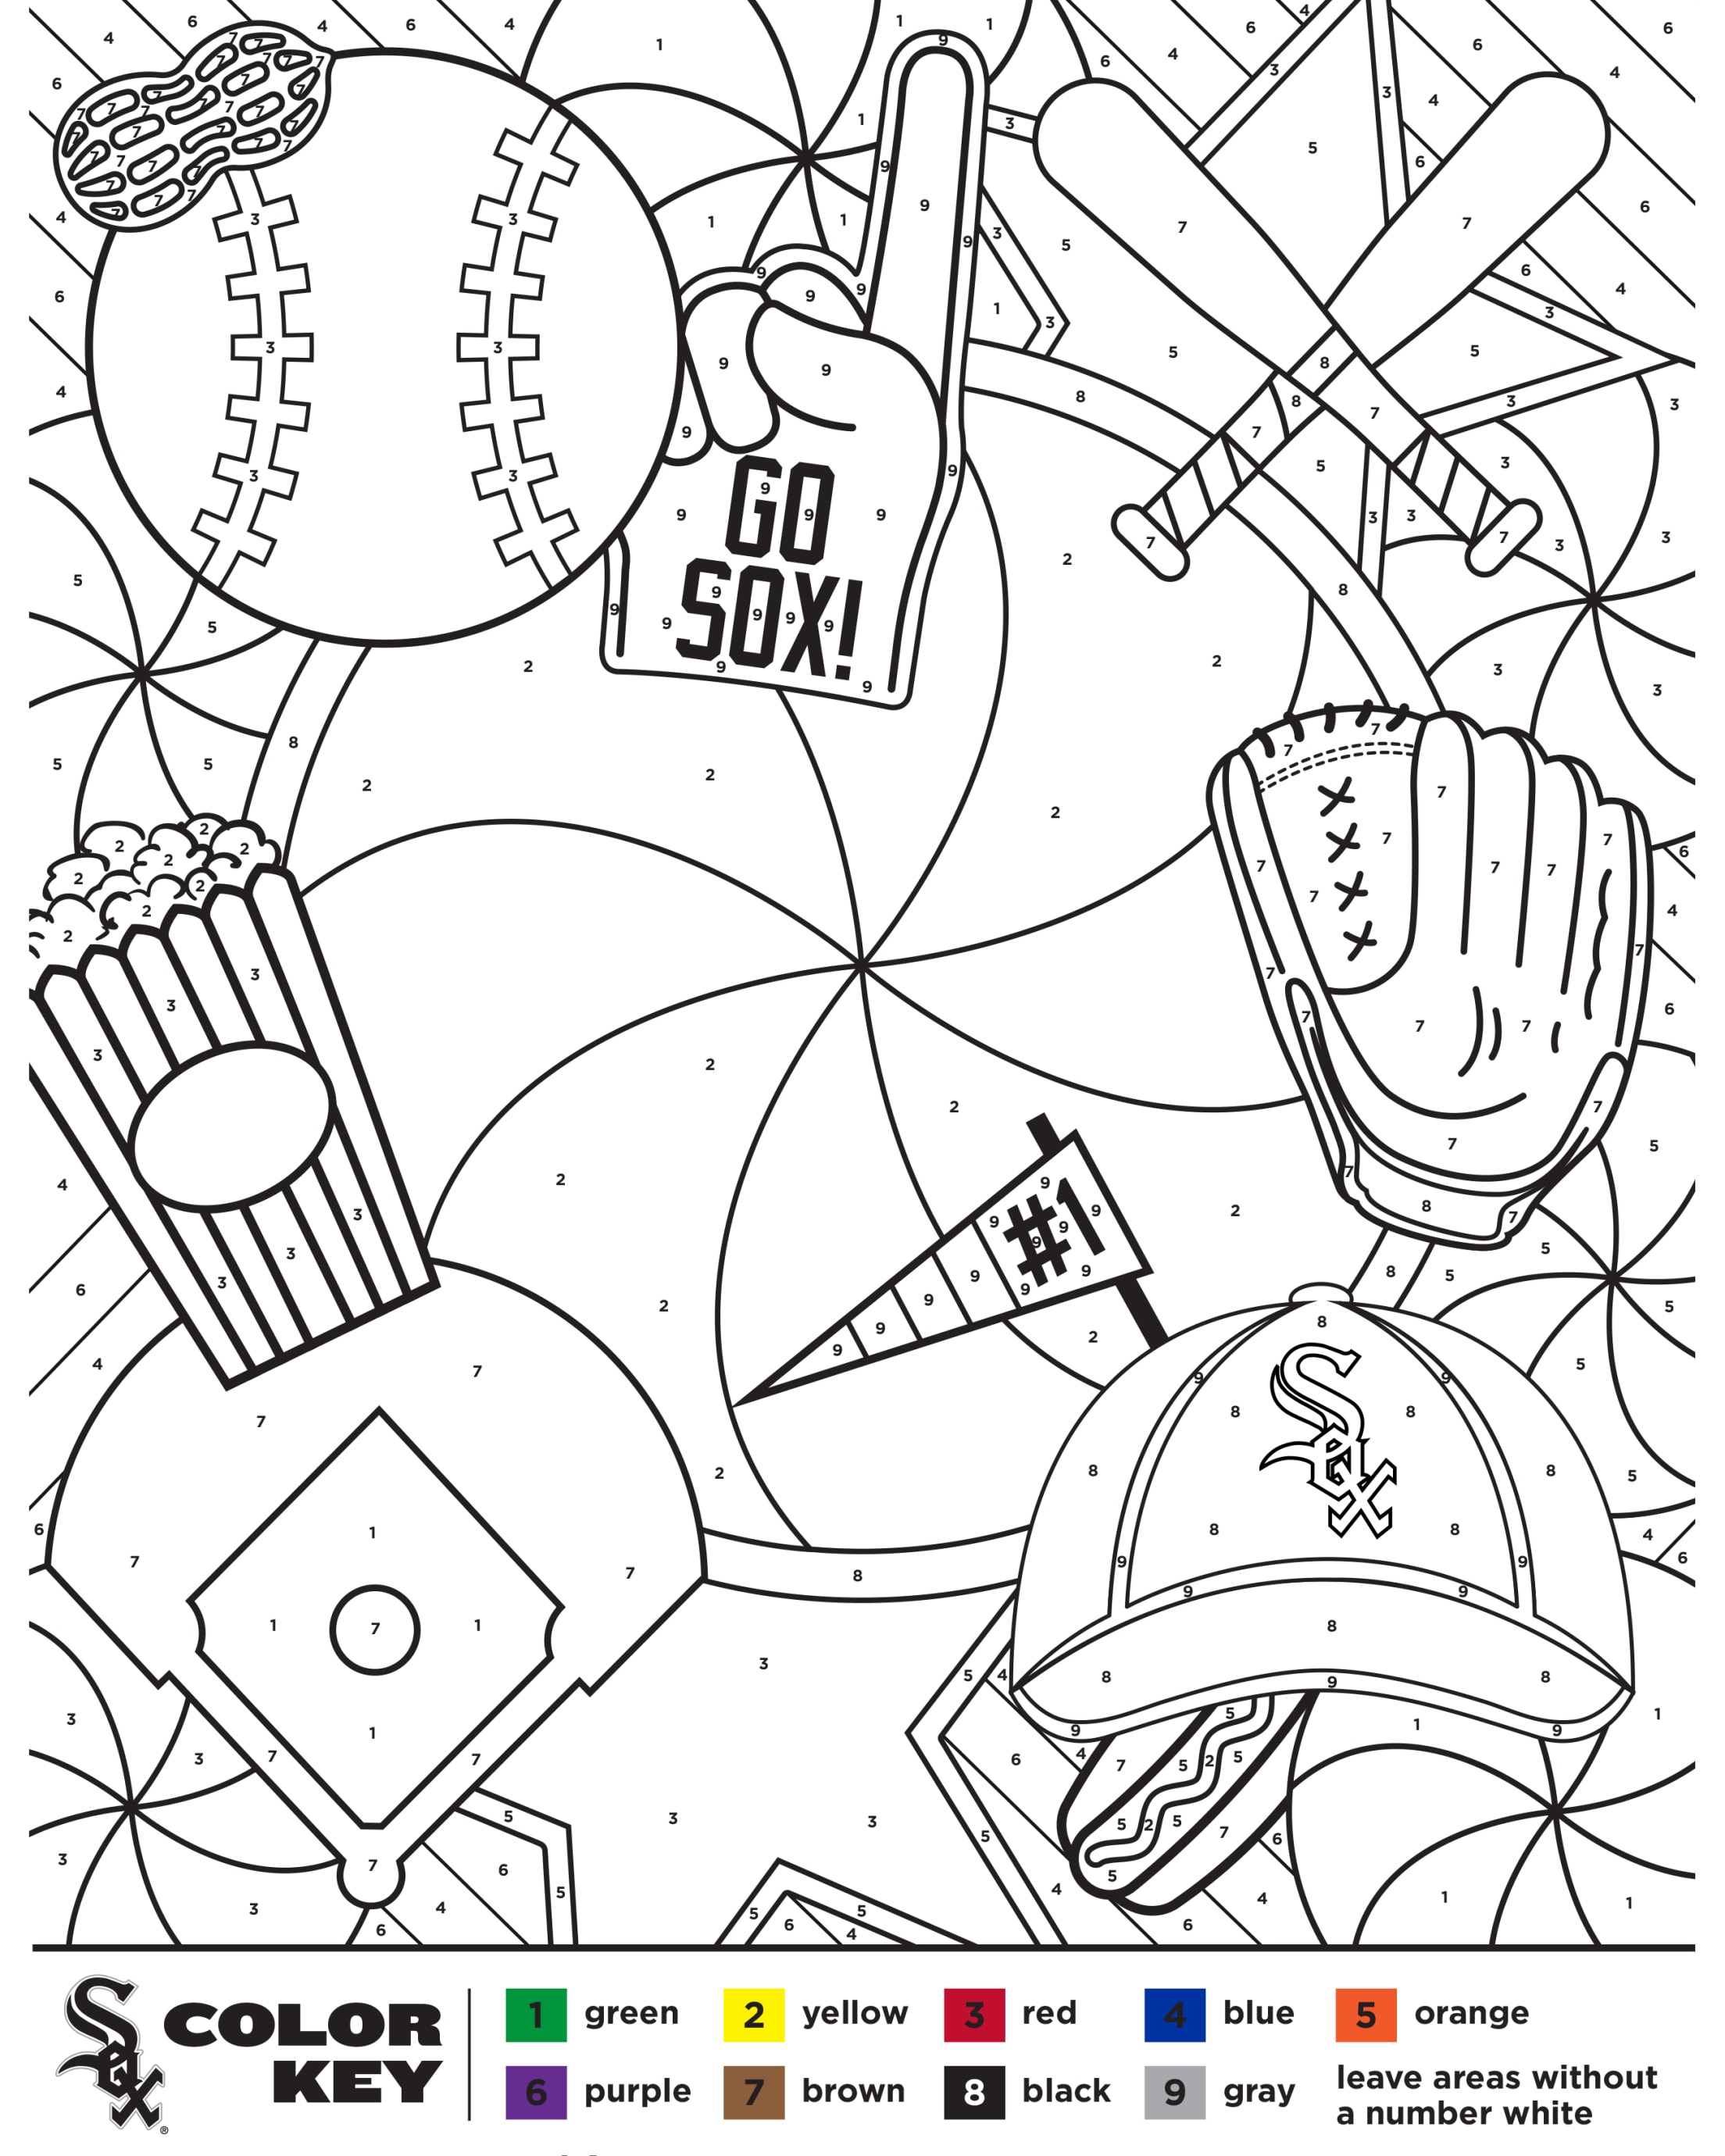 baseball printable coloring pages